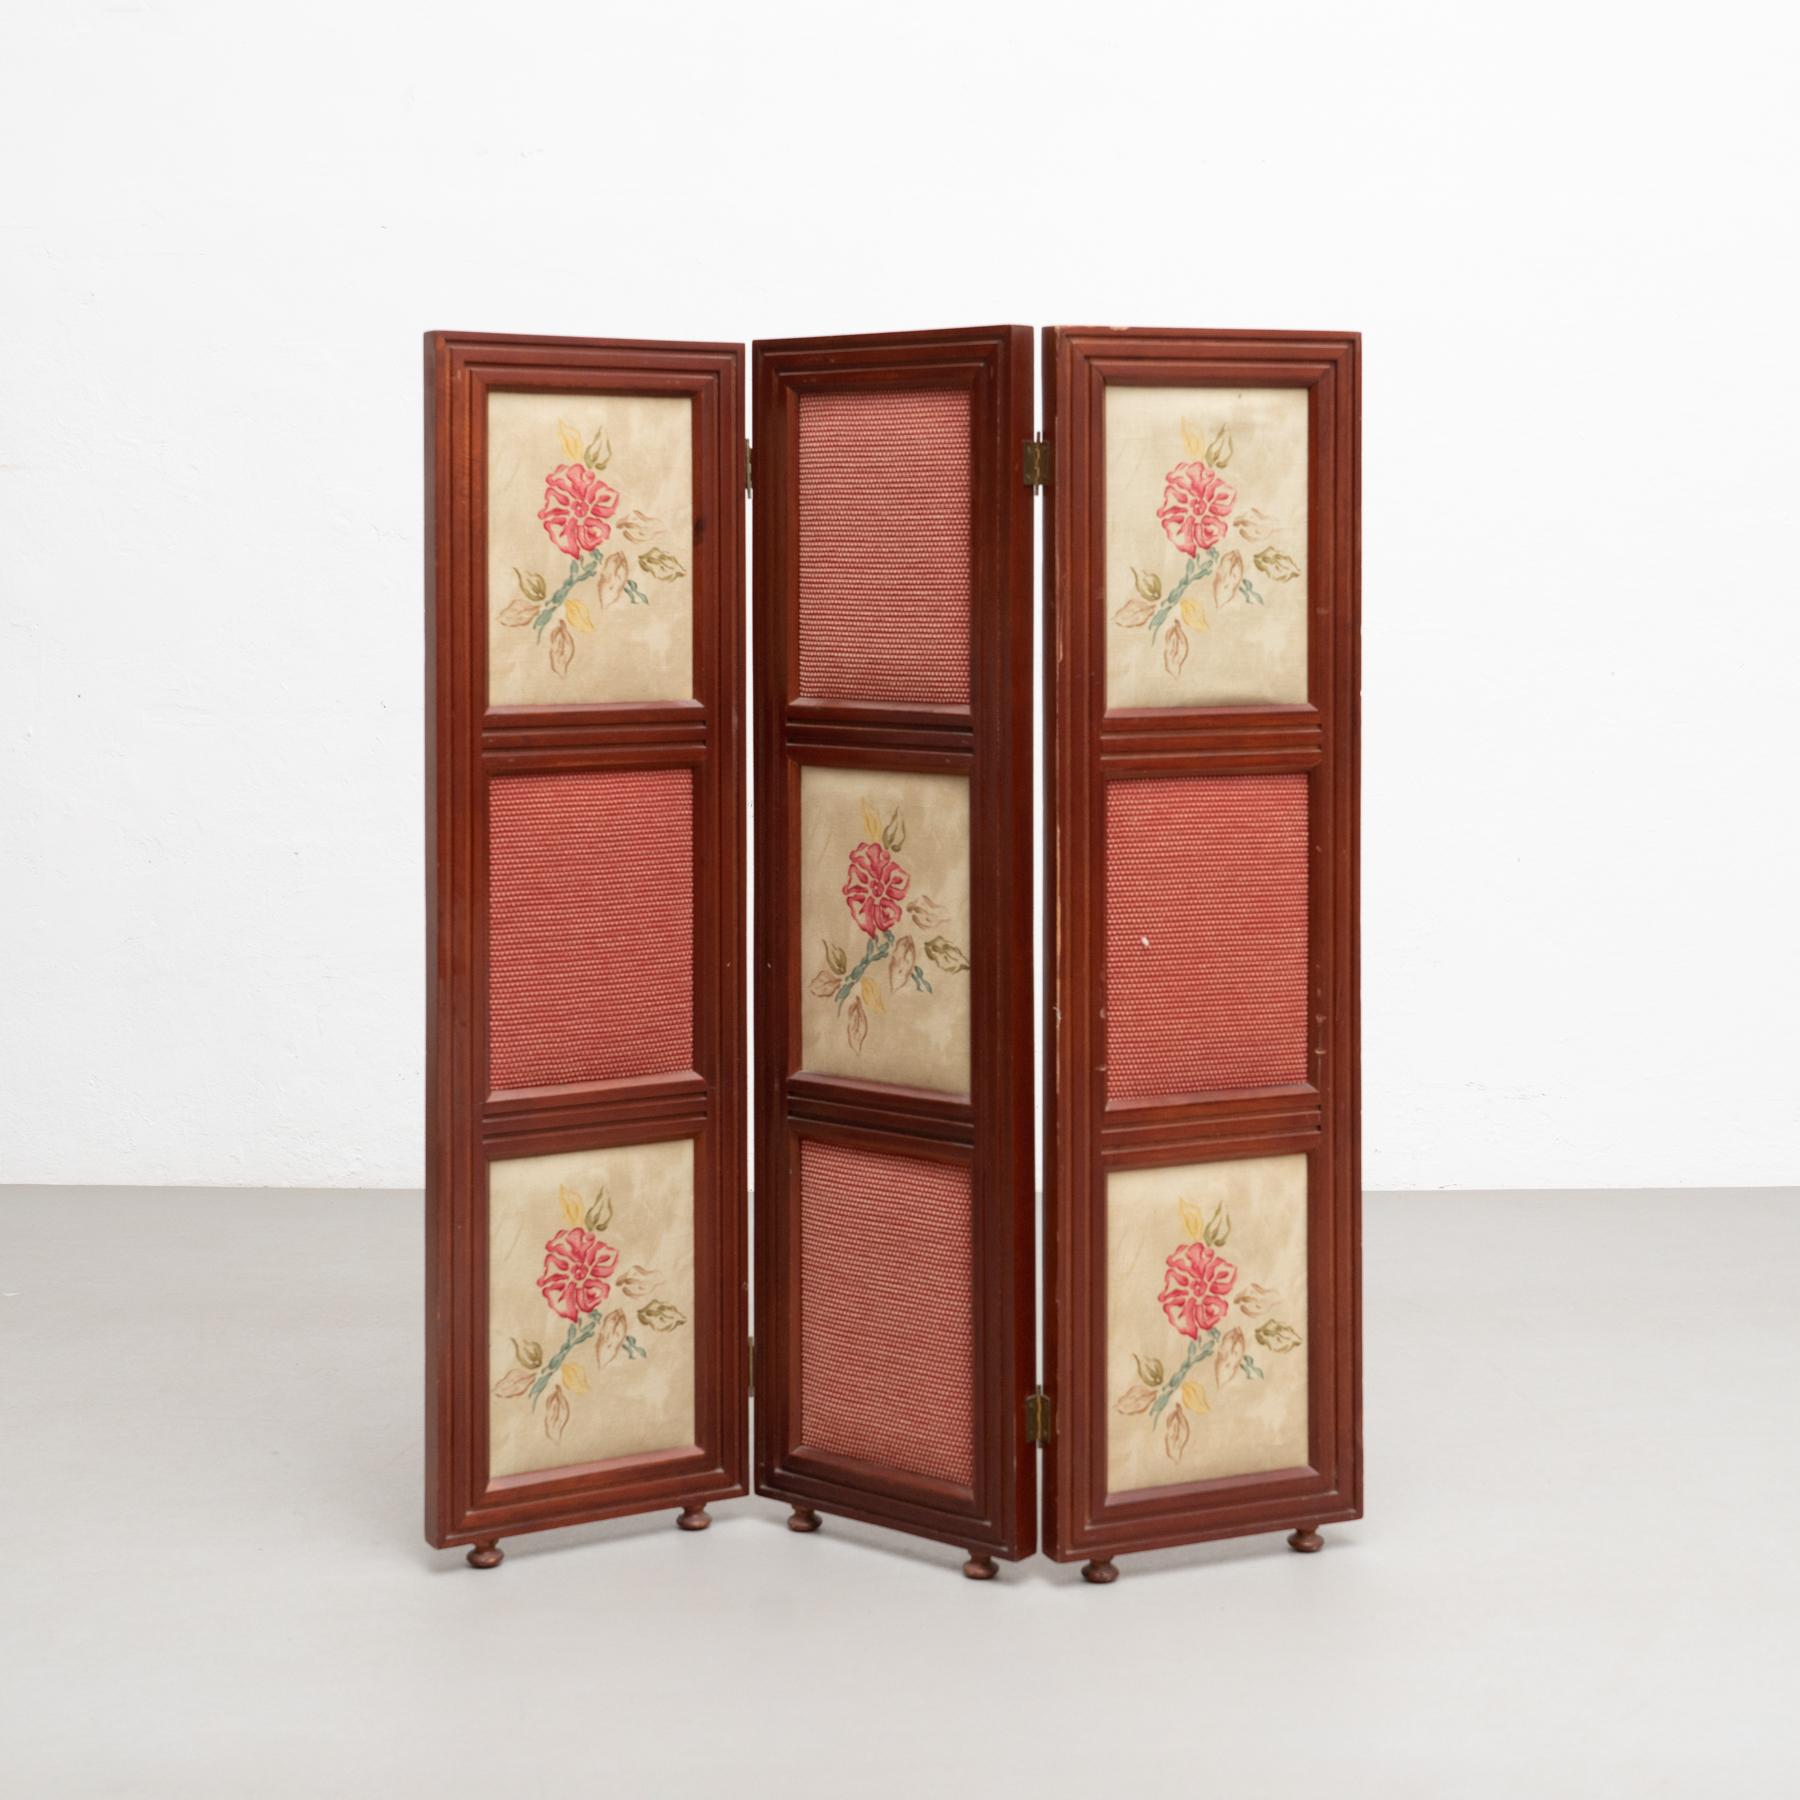 Details about   Folding Screen Room Divider Antique Vintage 4 Panel Wooden Decoration Privacy 